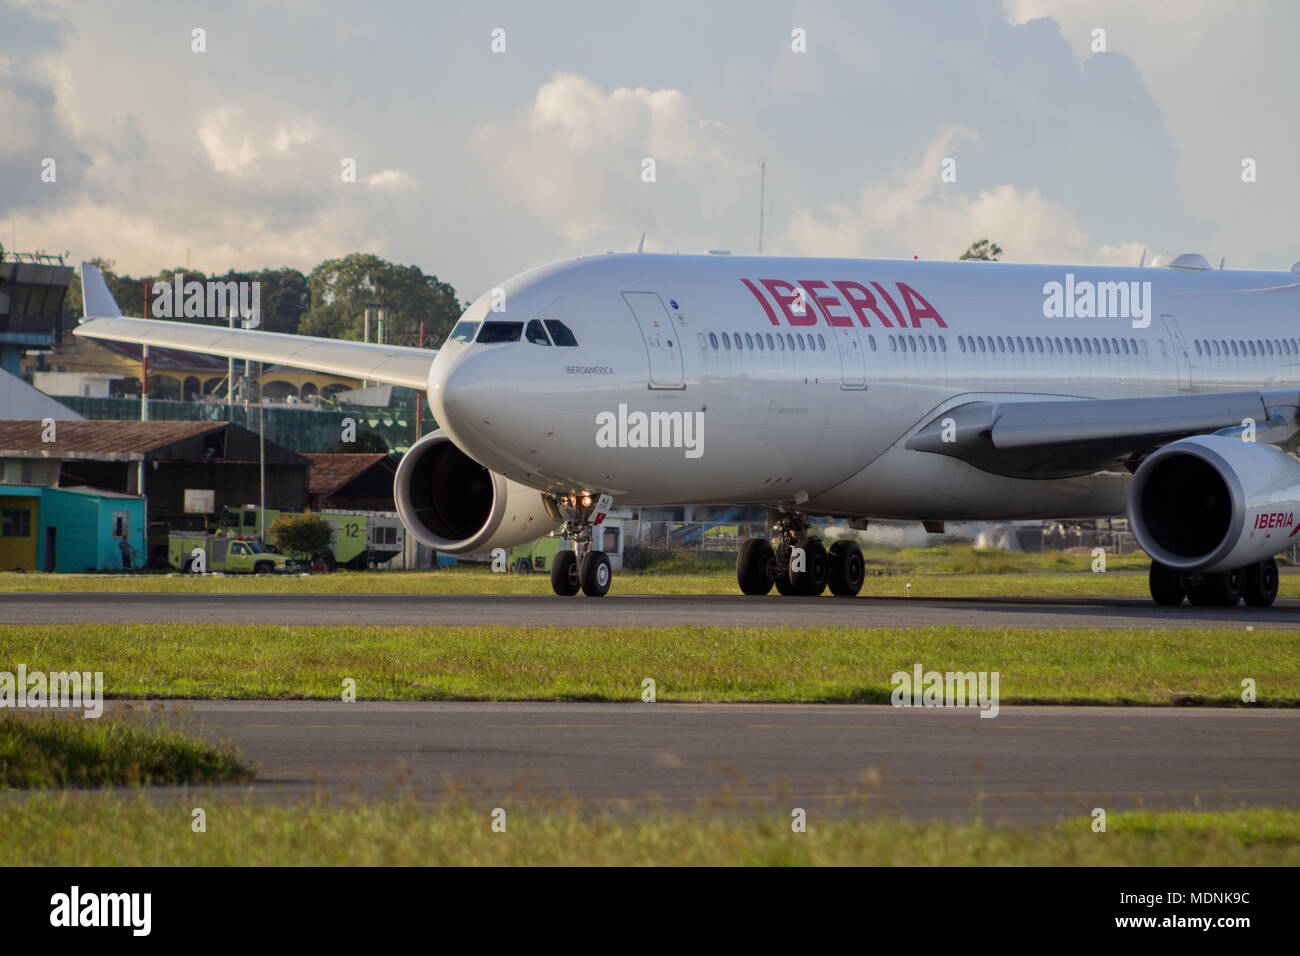 Iberia a330 taking off from Guatemala City Stock Photo